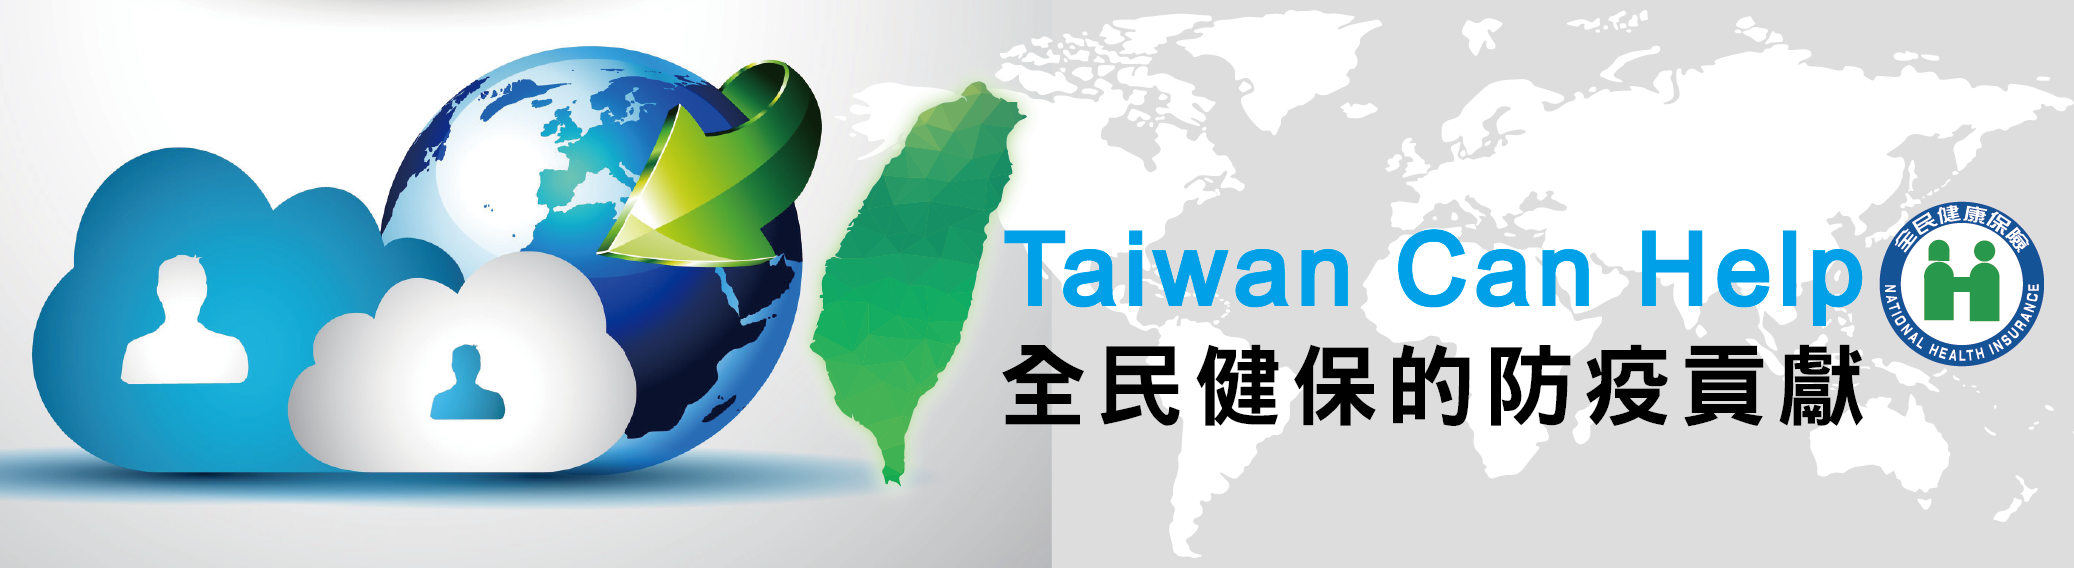 Taiwan Can Help 